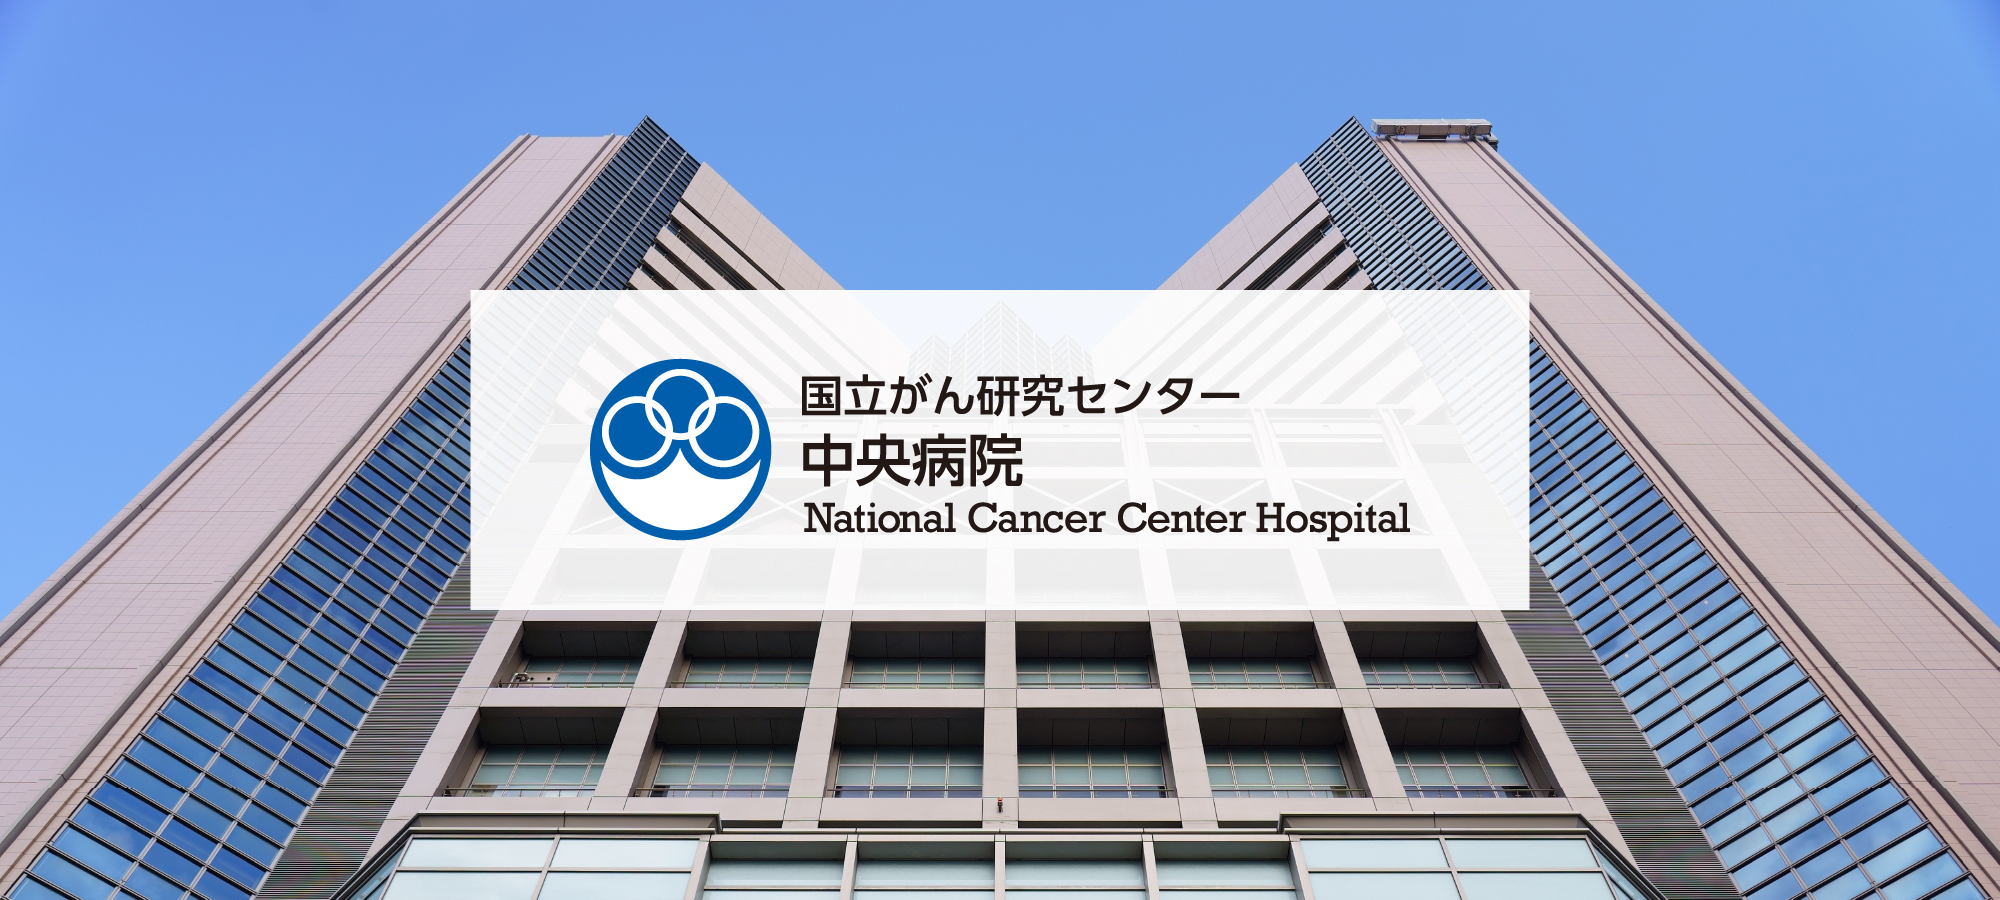 Ospital ng National Cancer Center